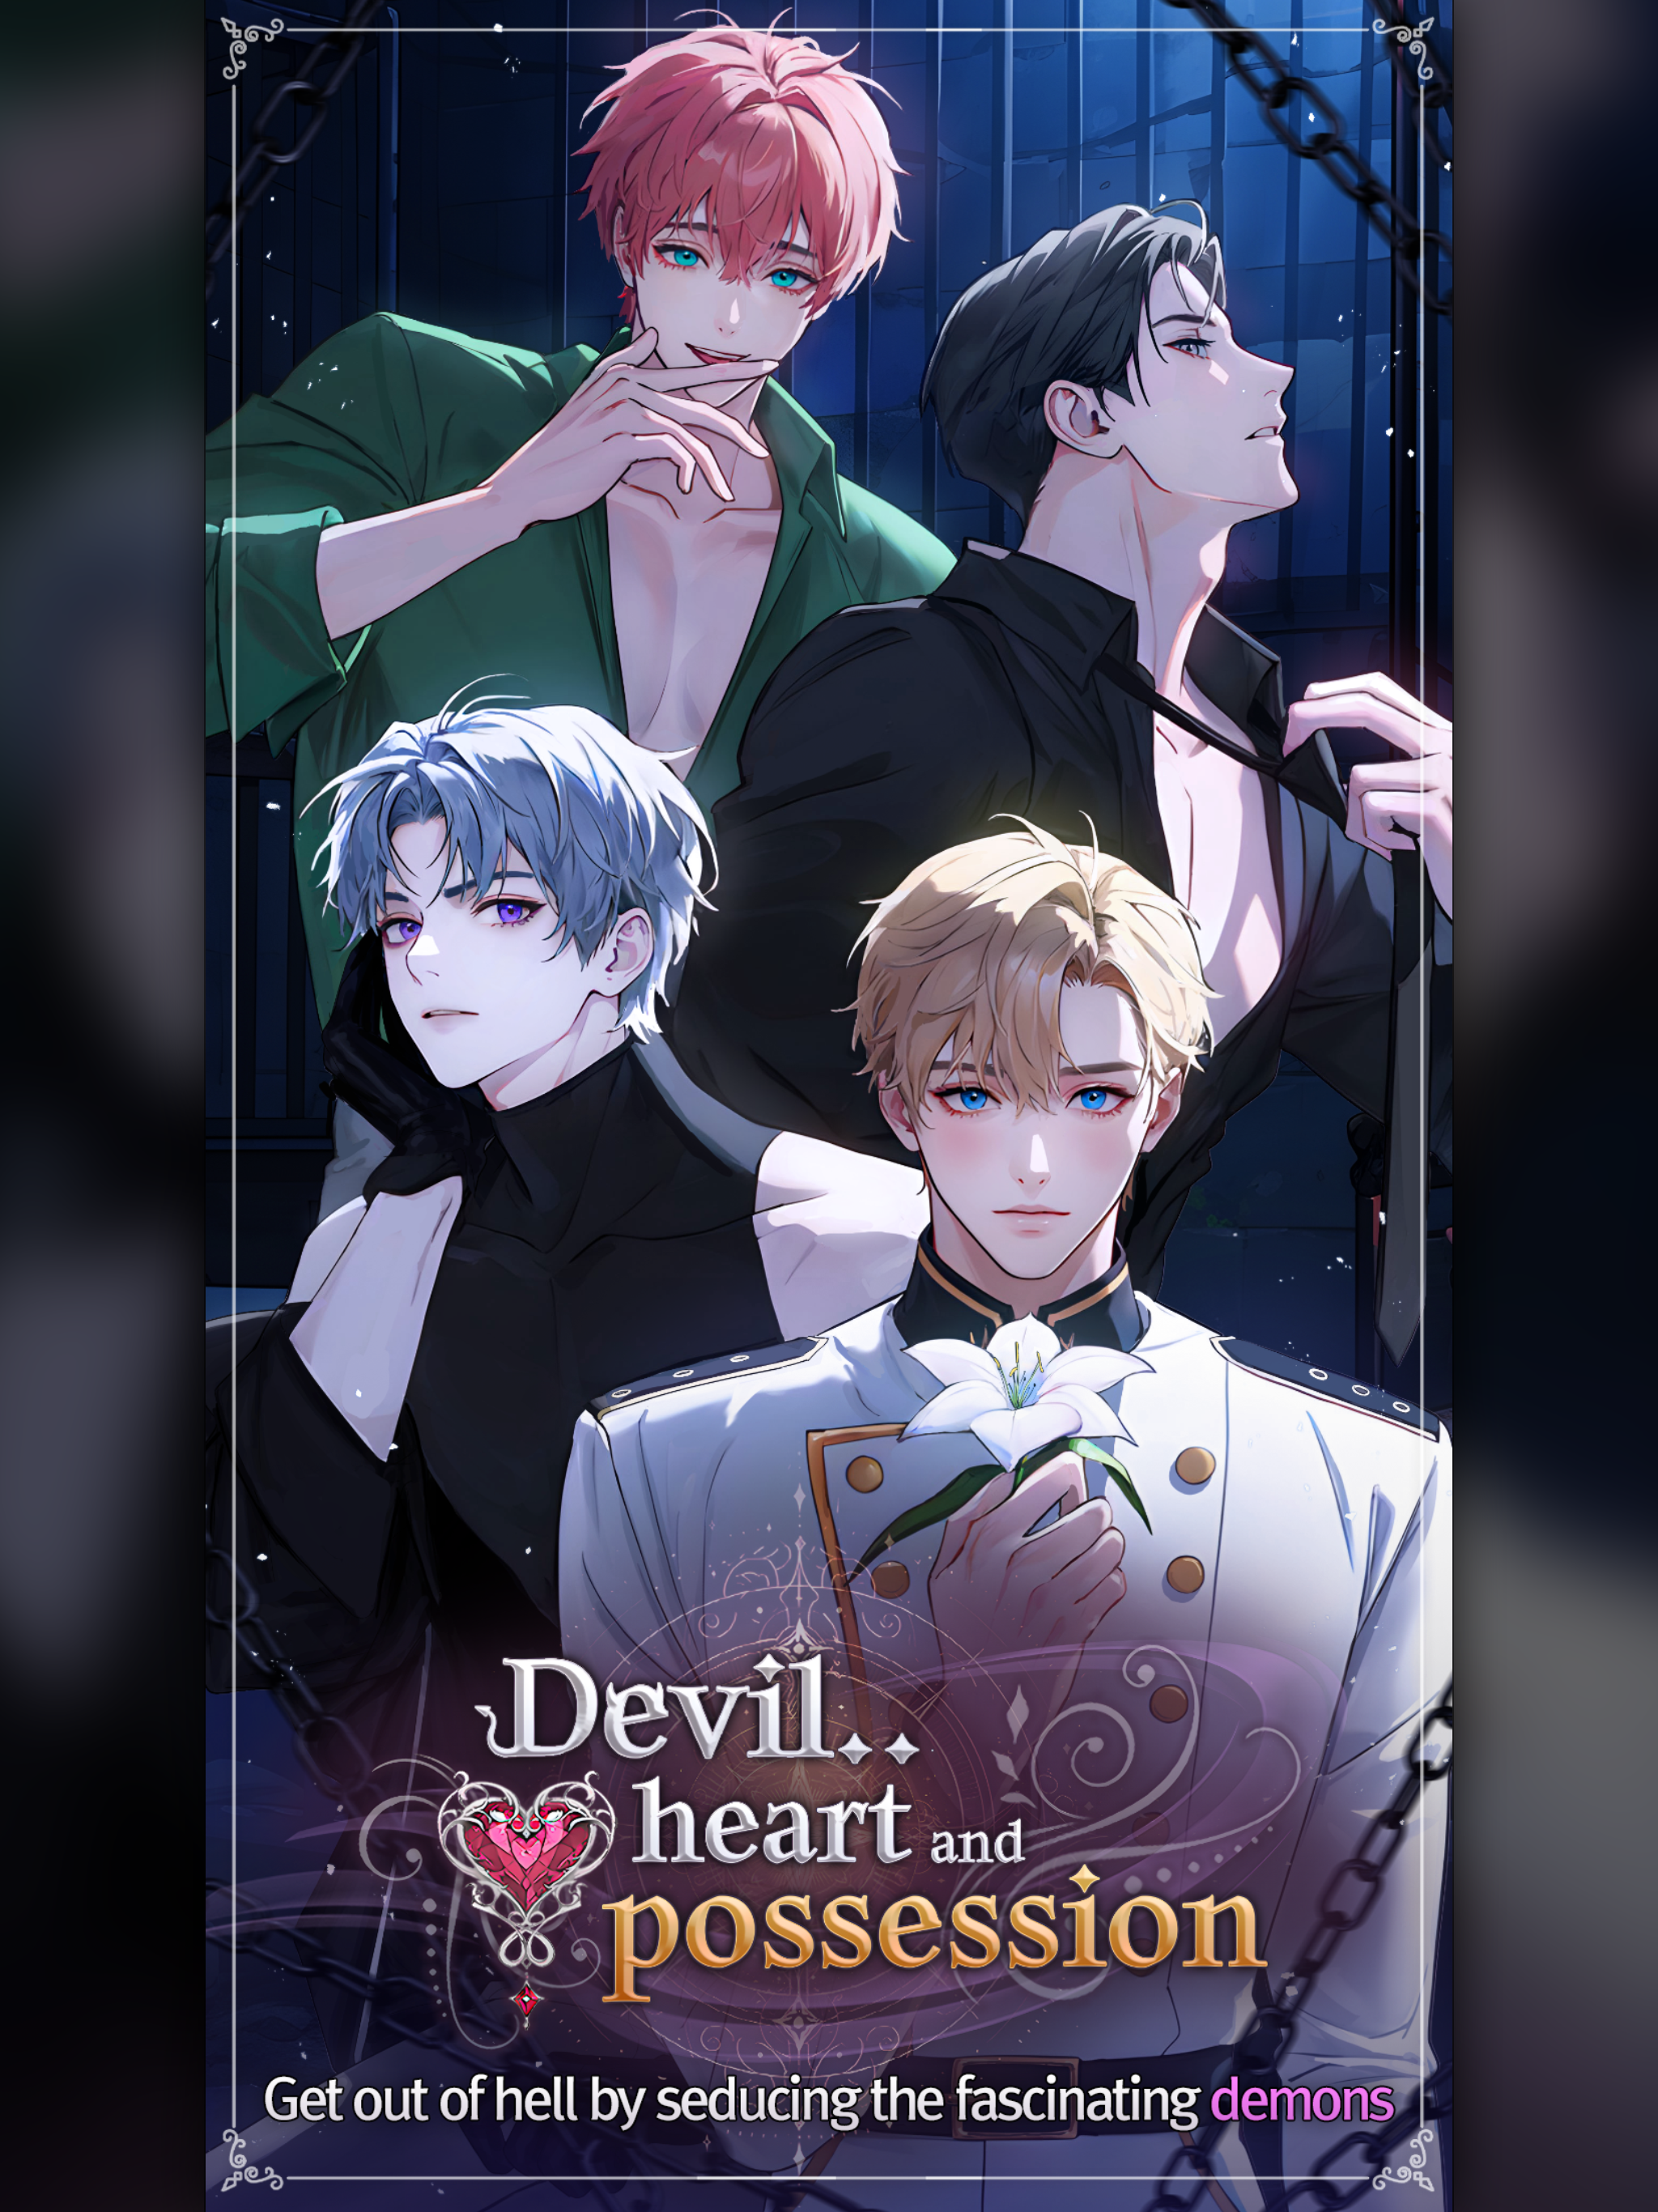 Devil, heart and possession screenshot game